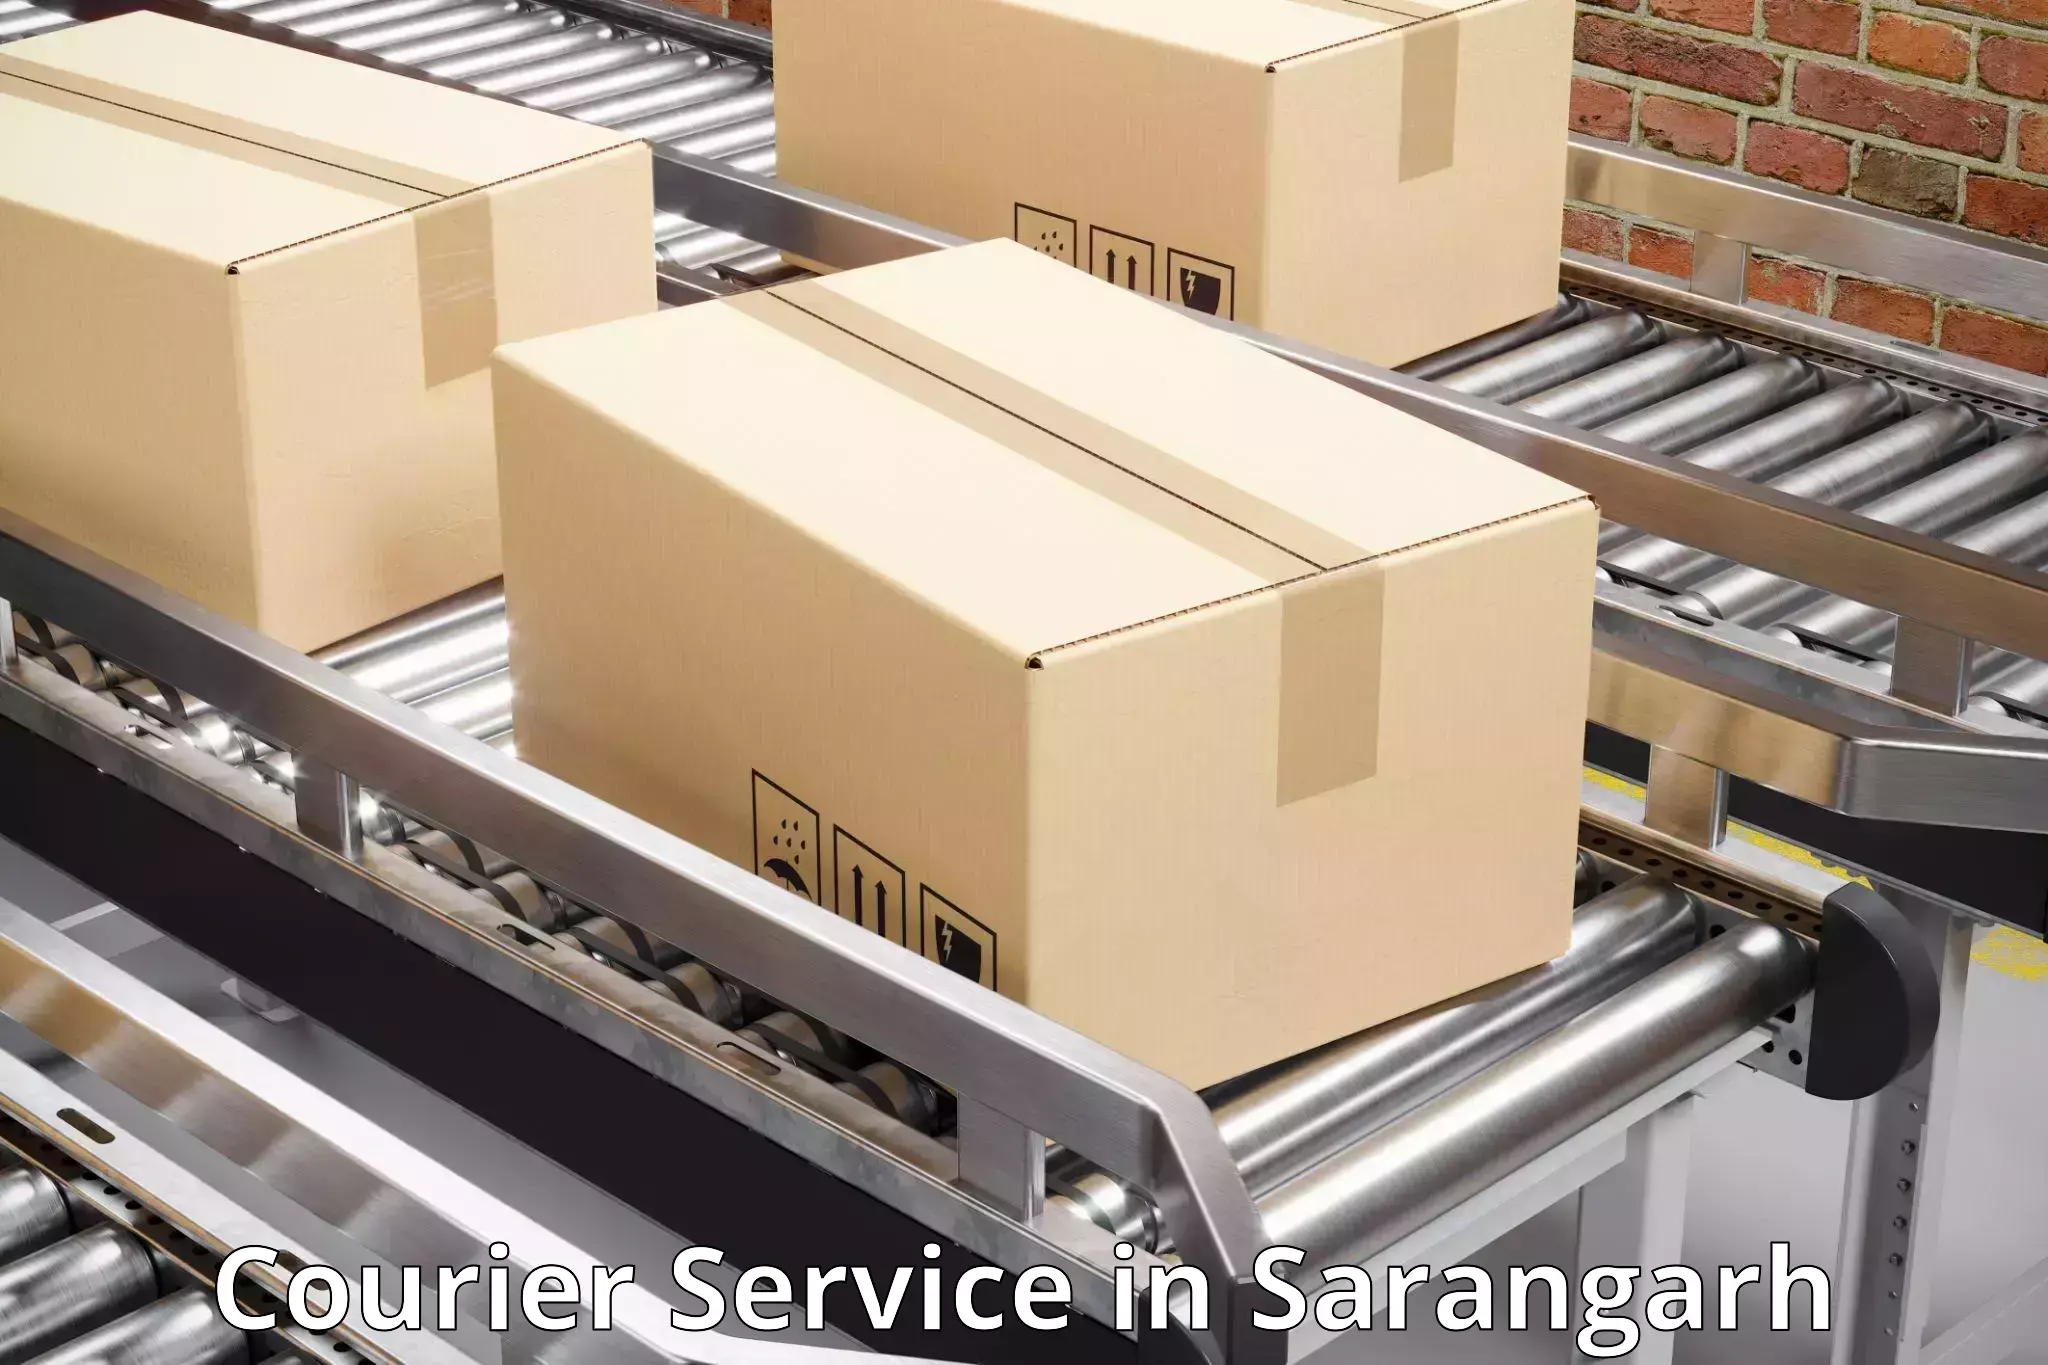 Express postal services in Sarangarh